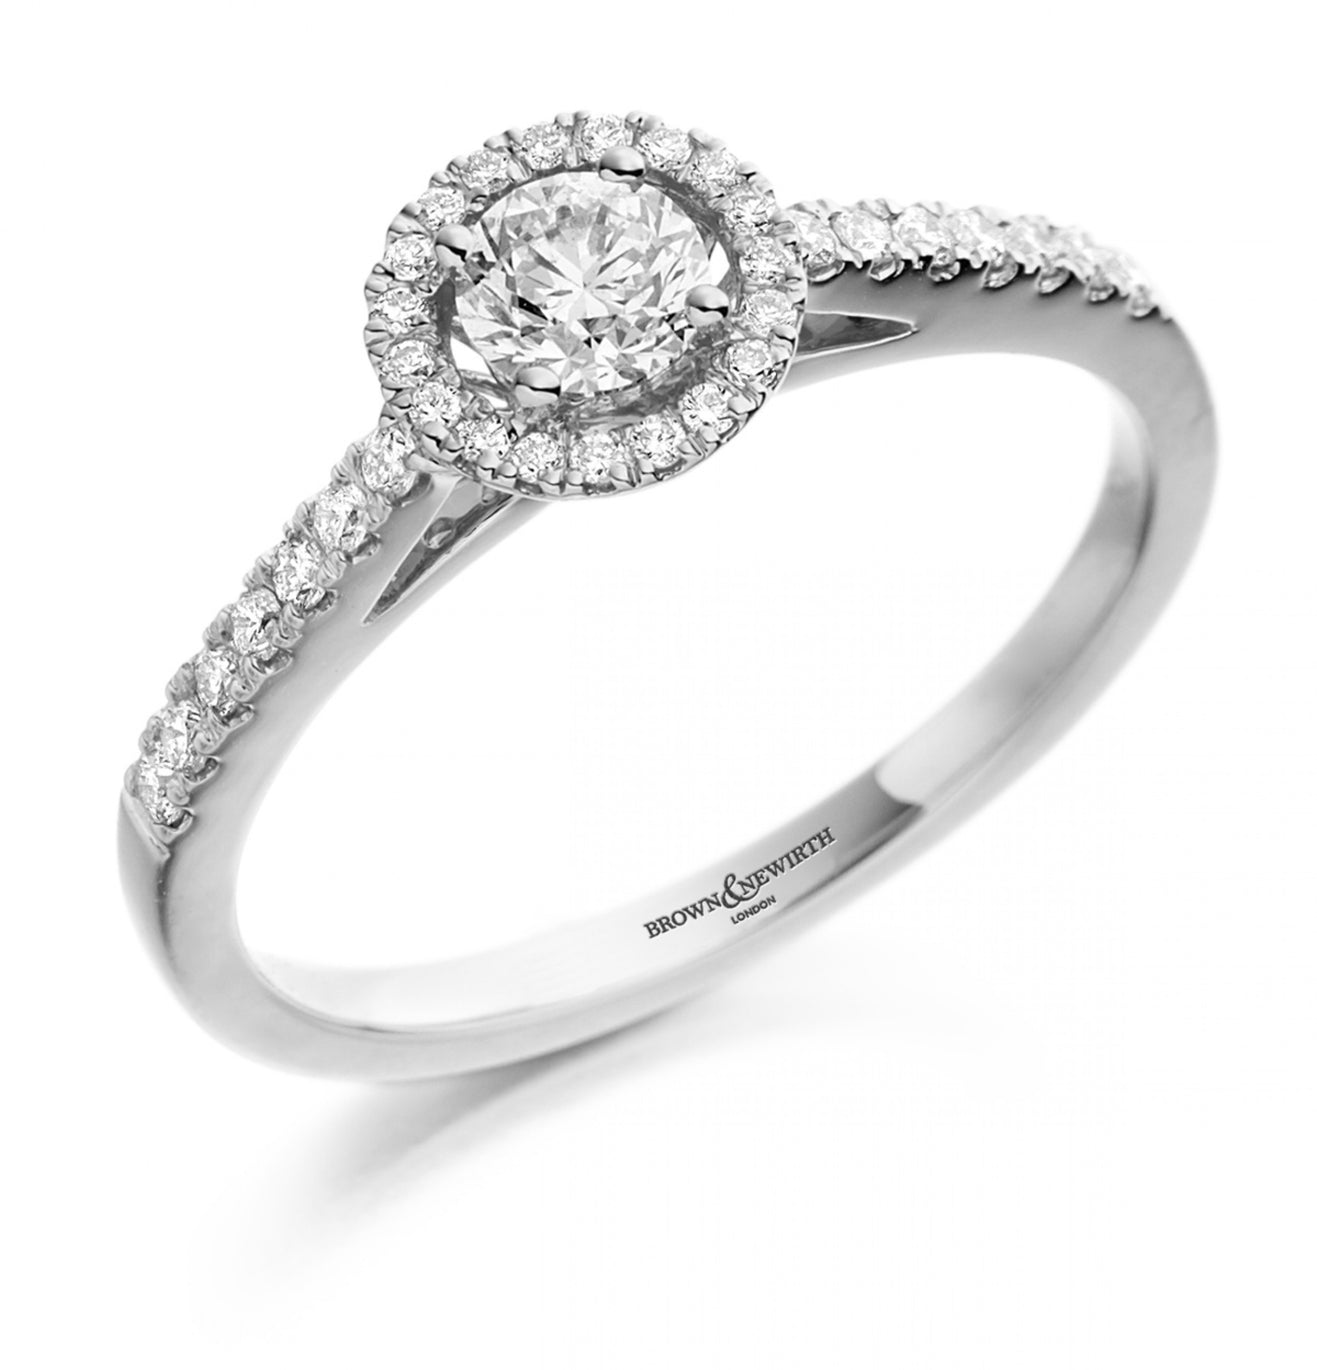 Brown & Newirth First Kiss Diamond Engagement Ring